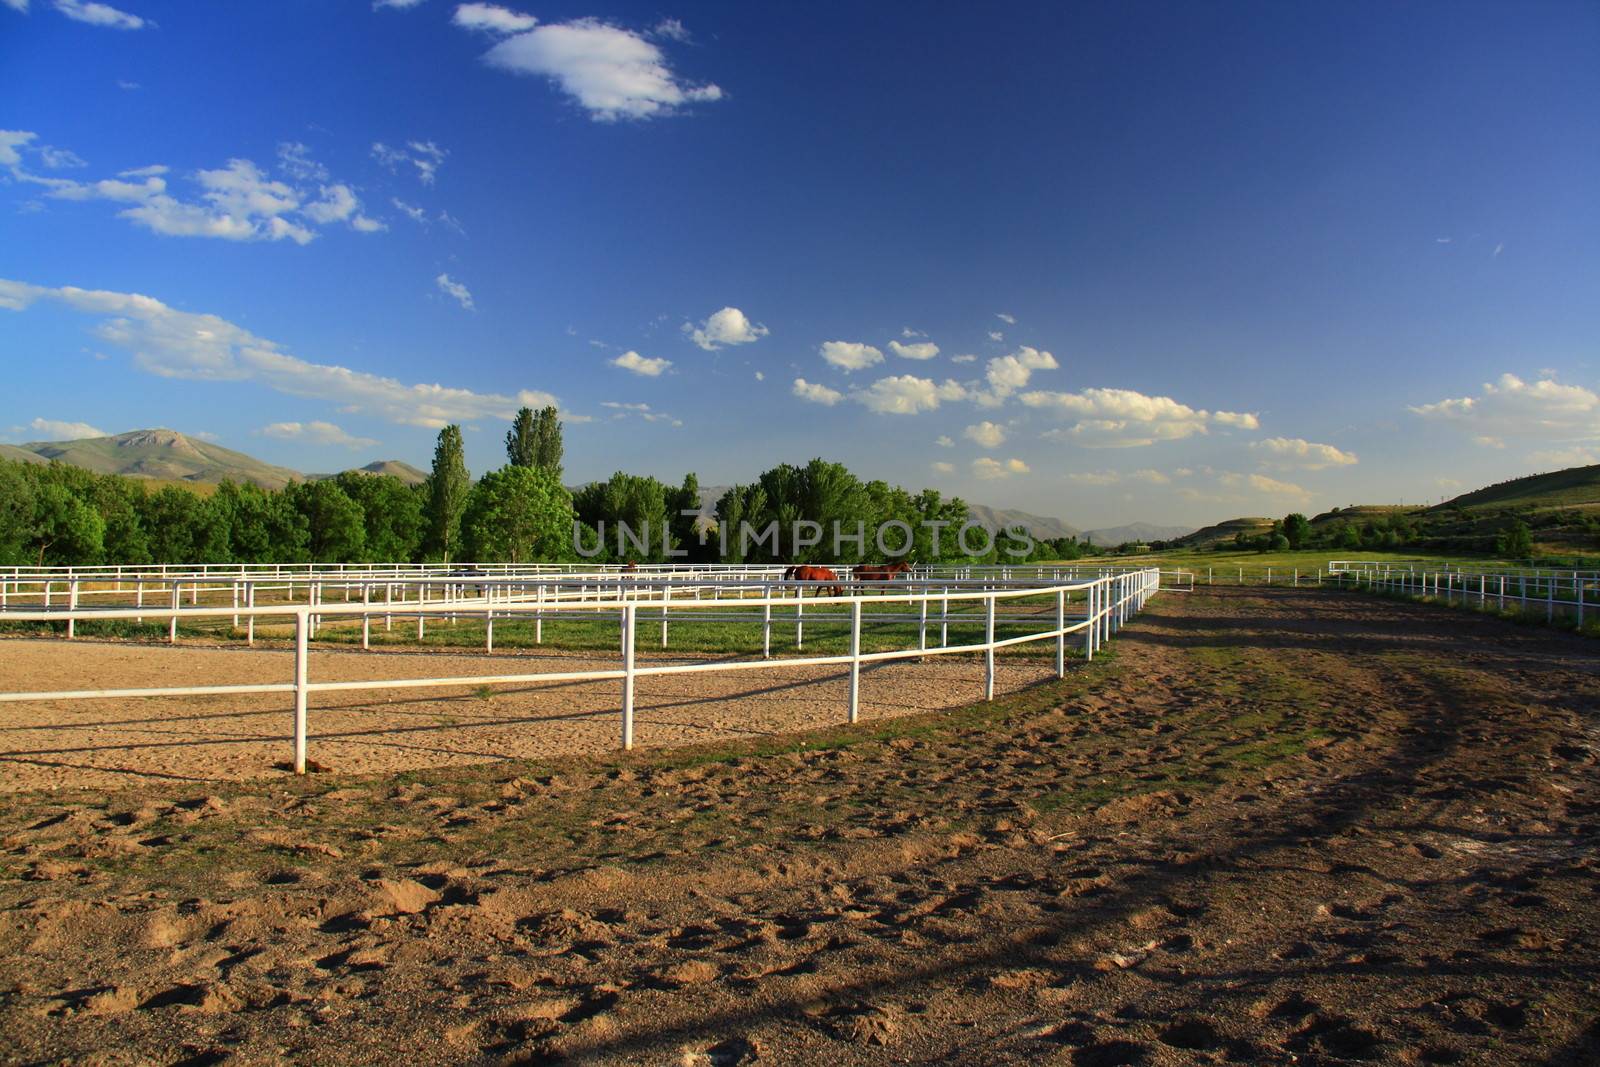 area for horse training by mturhanlar